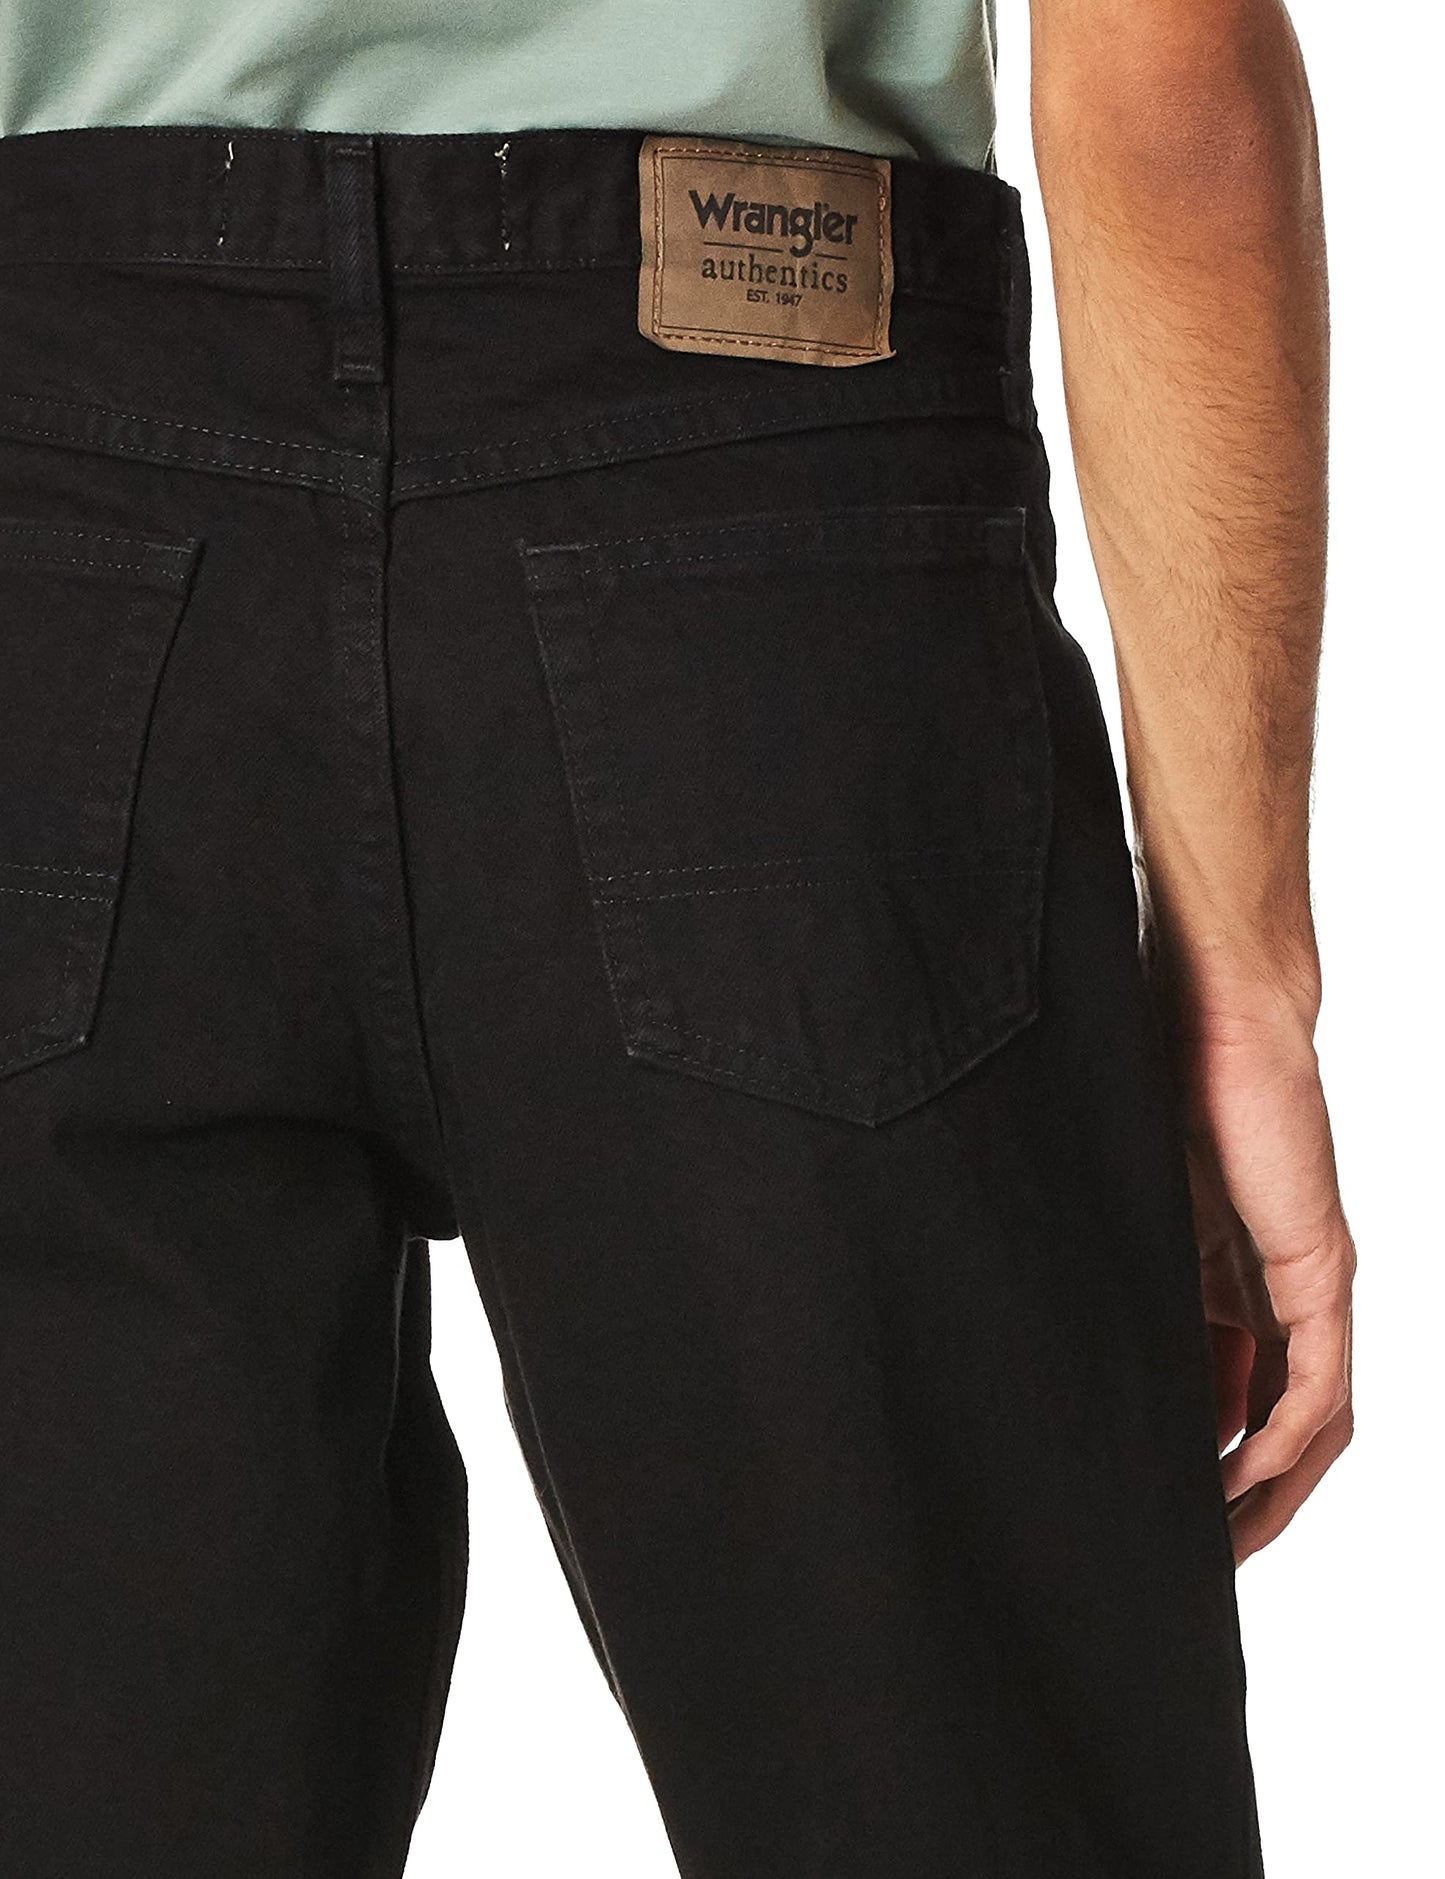 Wrangler Authentics Men's Classic 5-Pocket Relaxed Fit Cotton Jean, Black, 44W X 36L